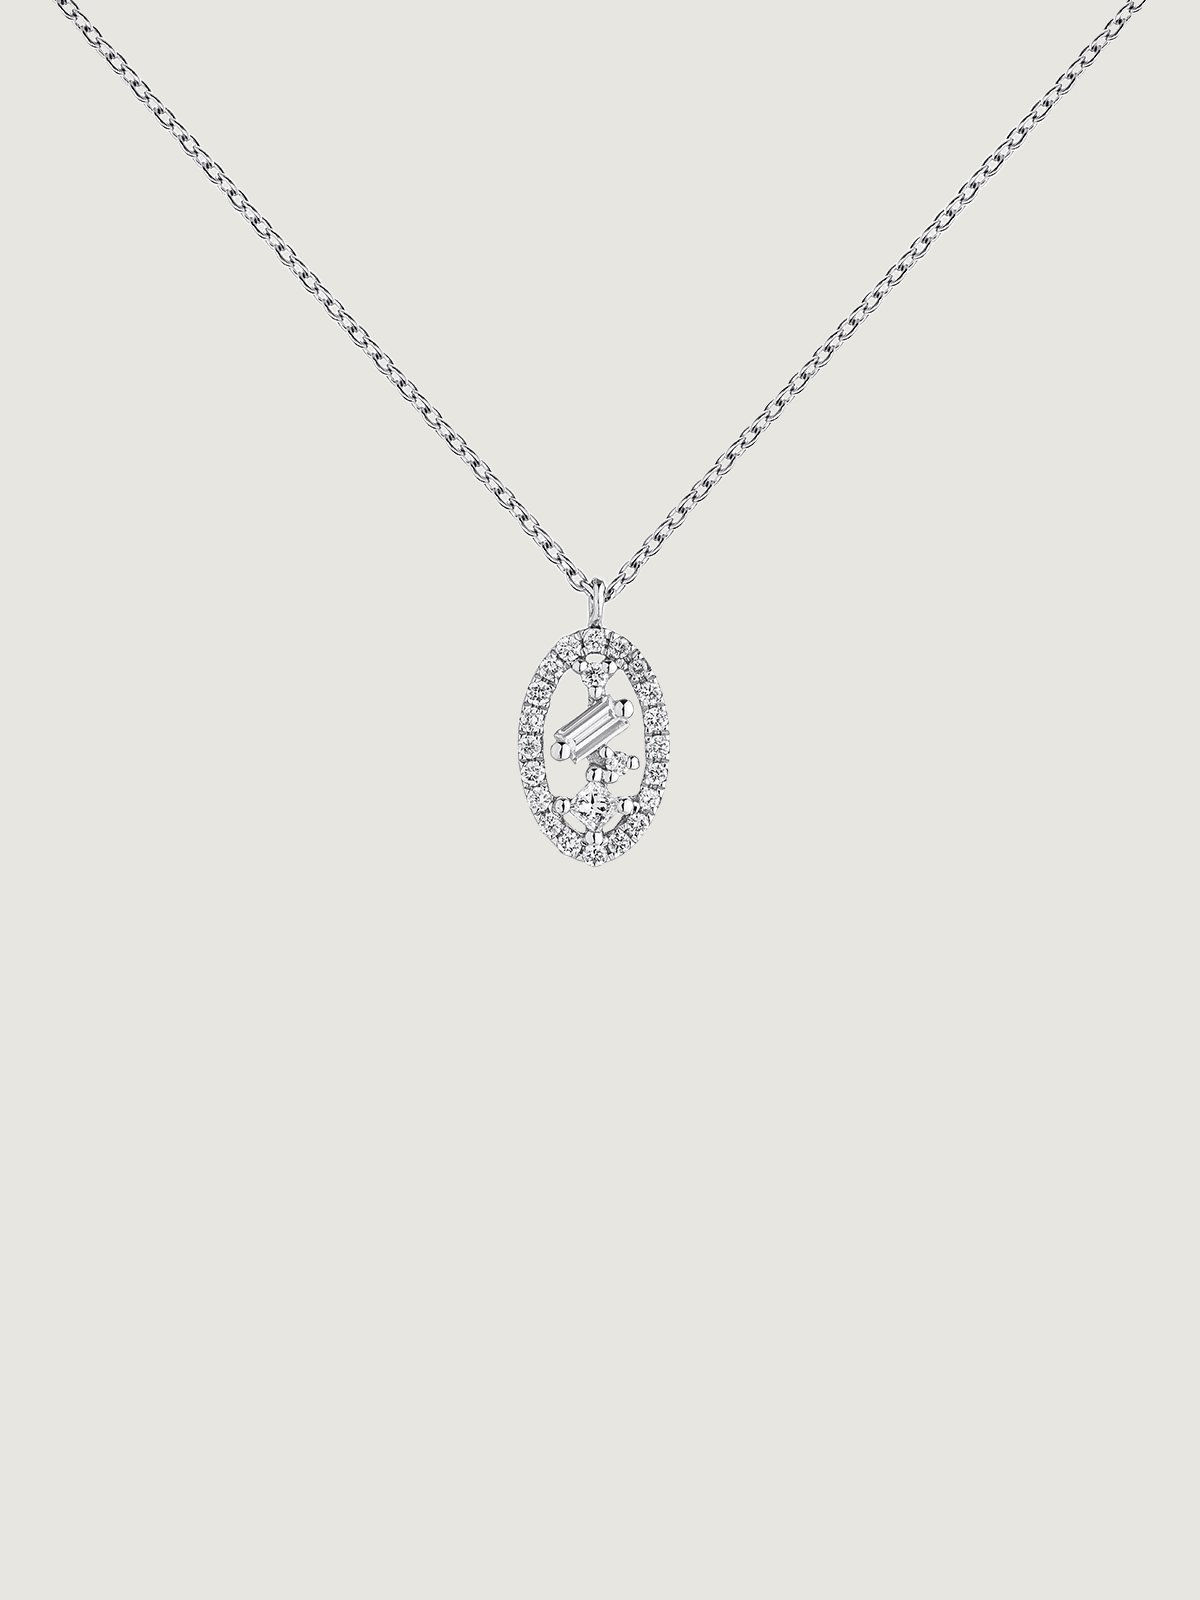 18K white gold pendant with diamond oval.